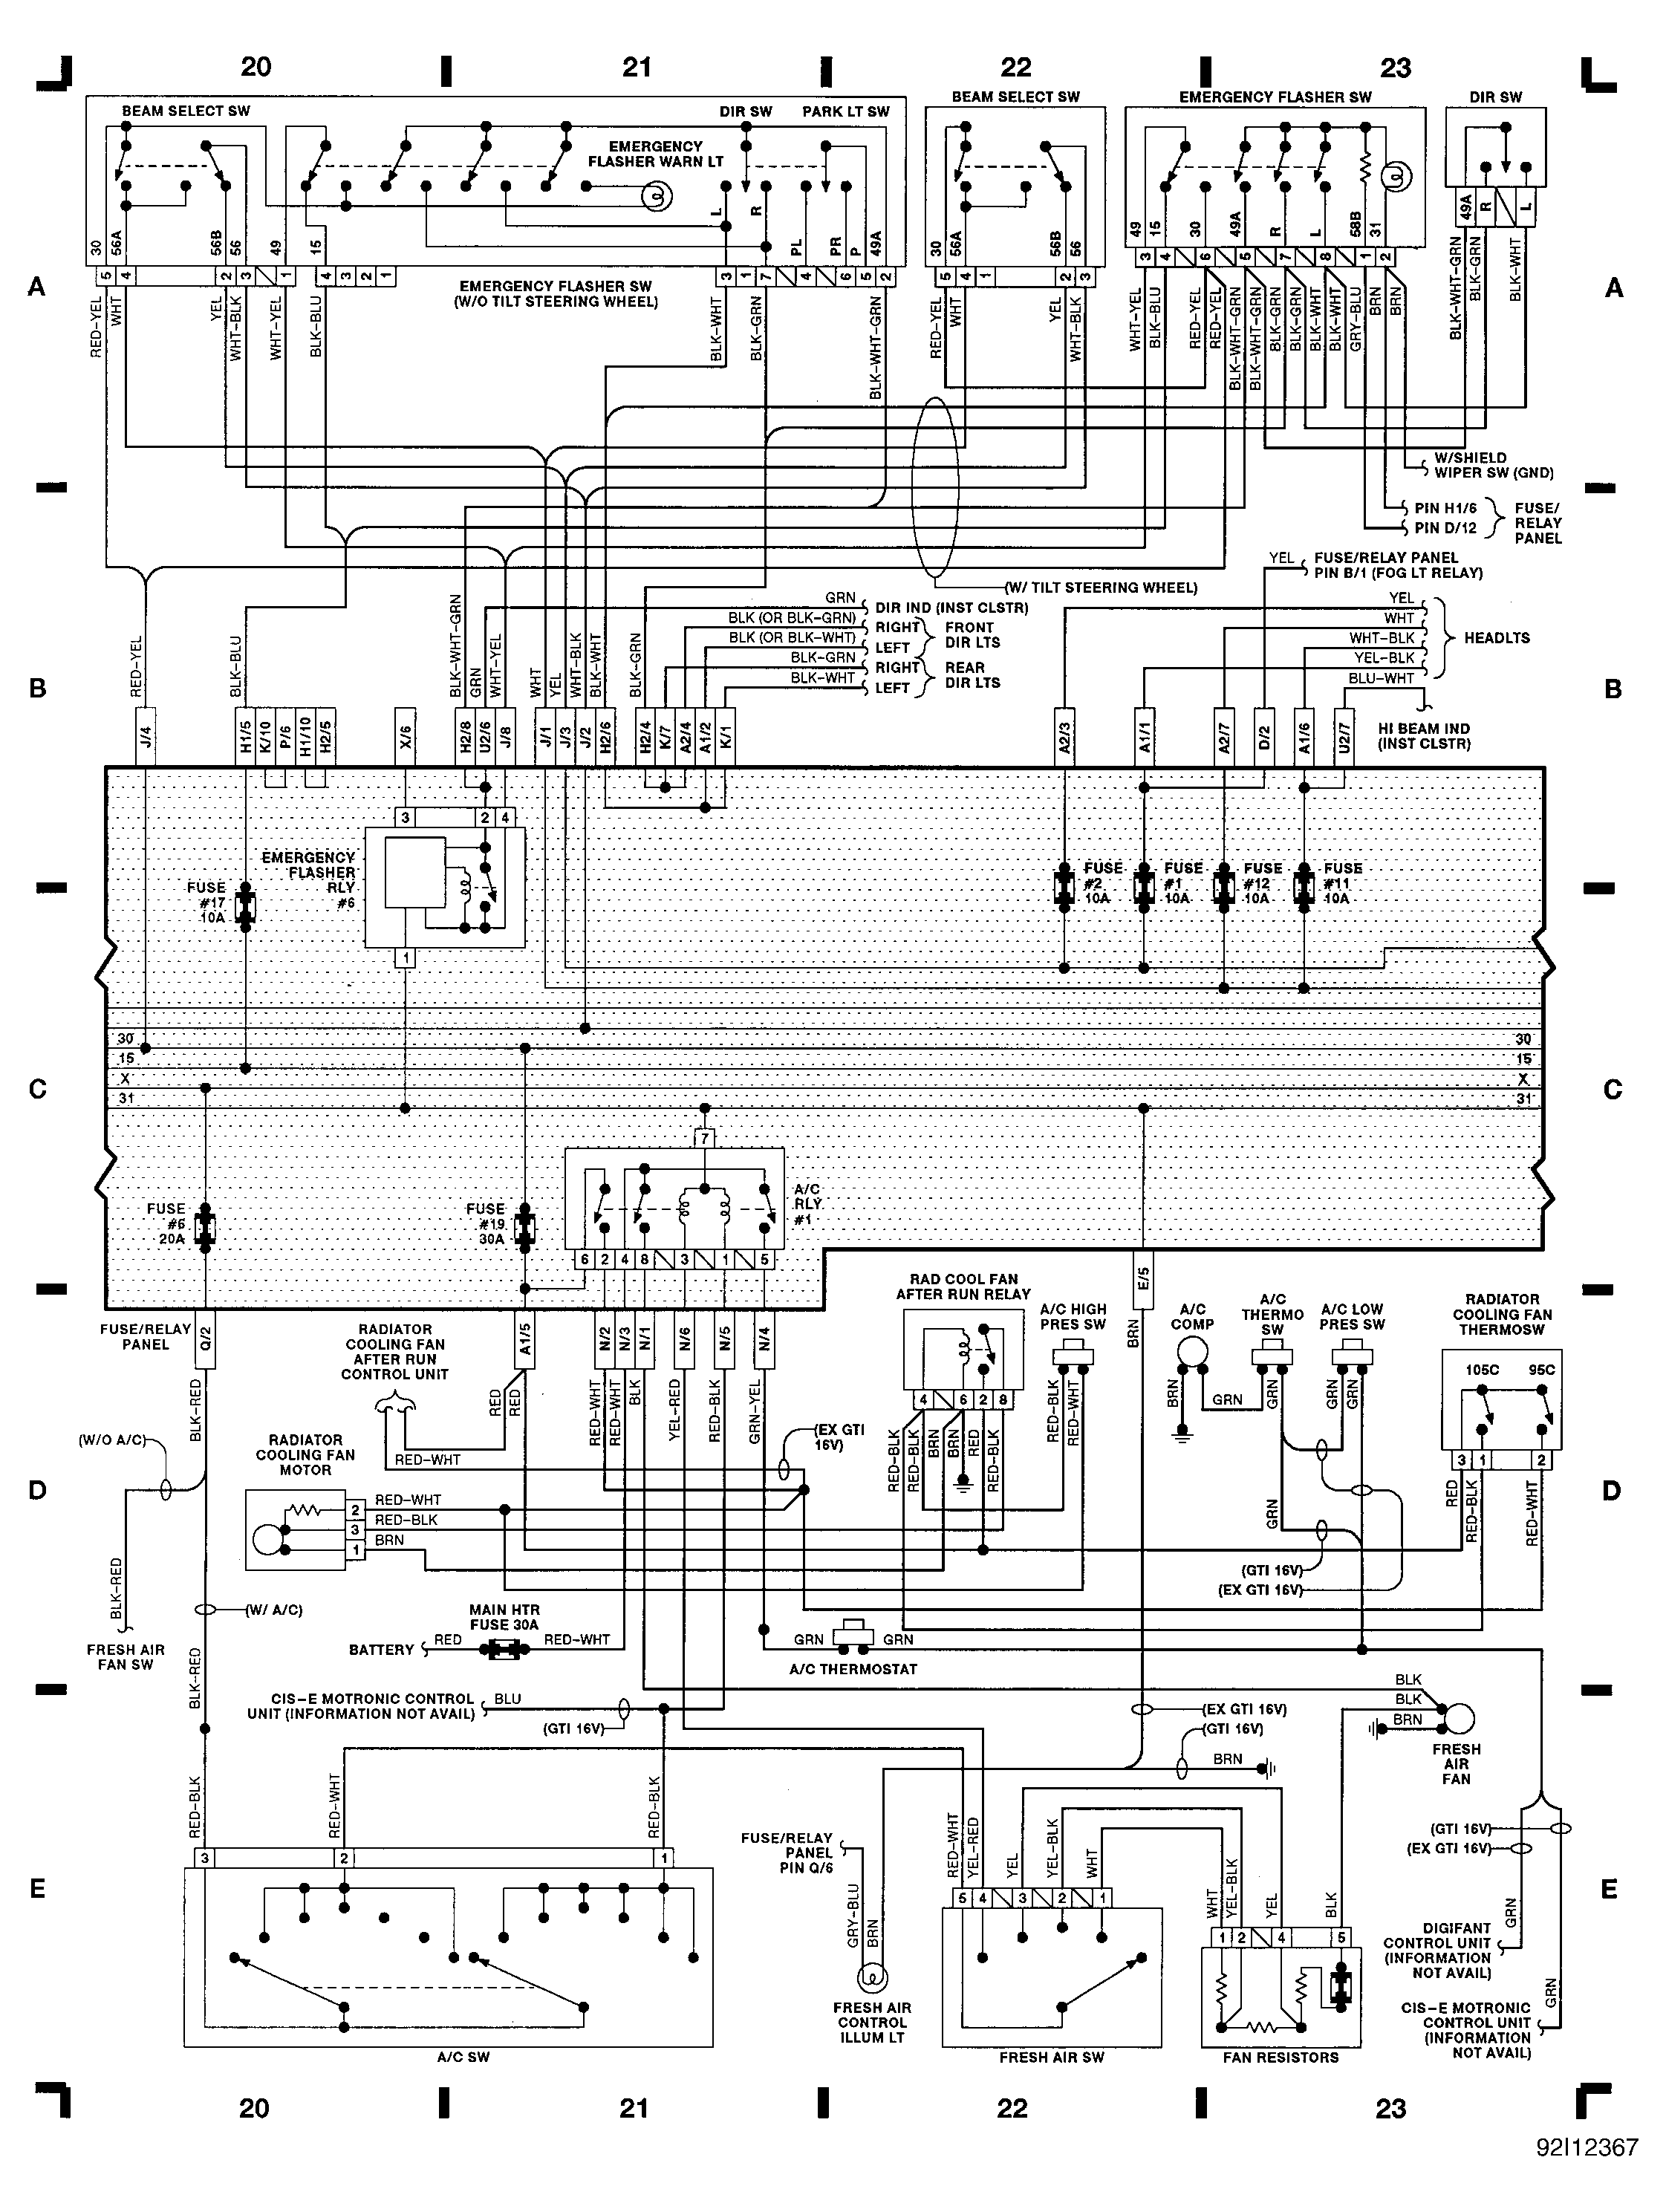 1992 Jetta Gt Fuse Diagram Wiring Diagram